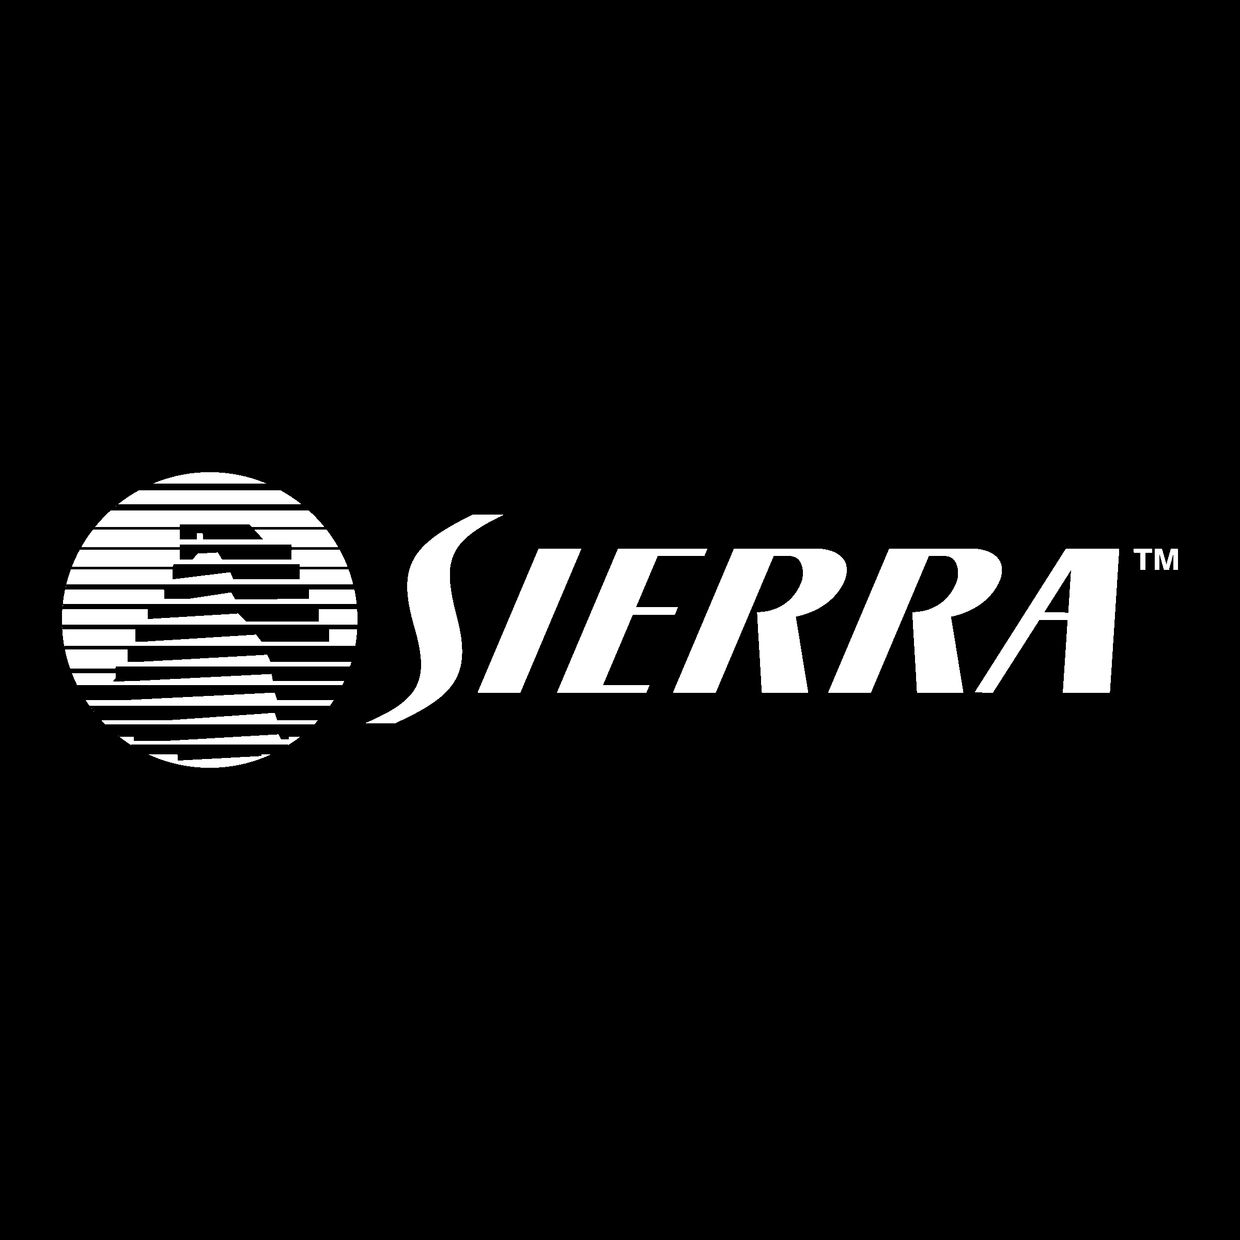 Tribes Aerial Assault Sierra logo